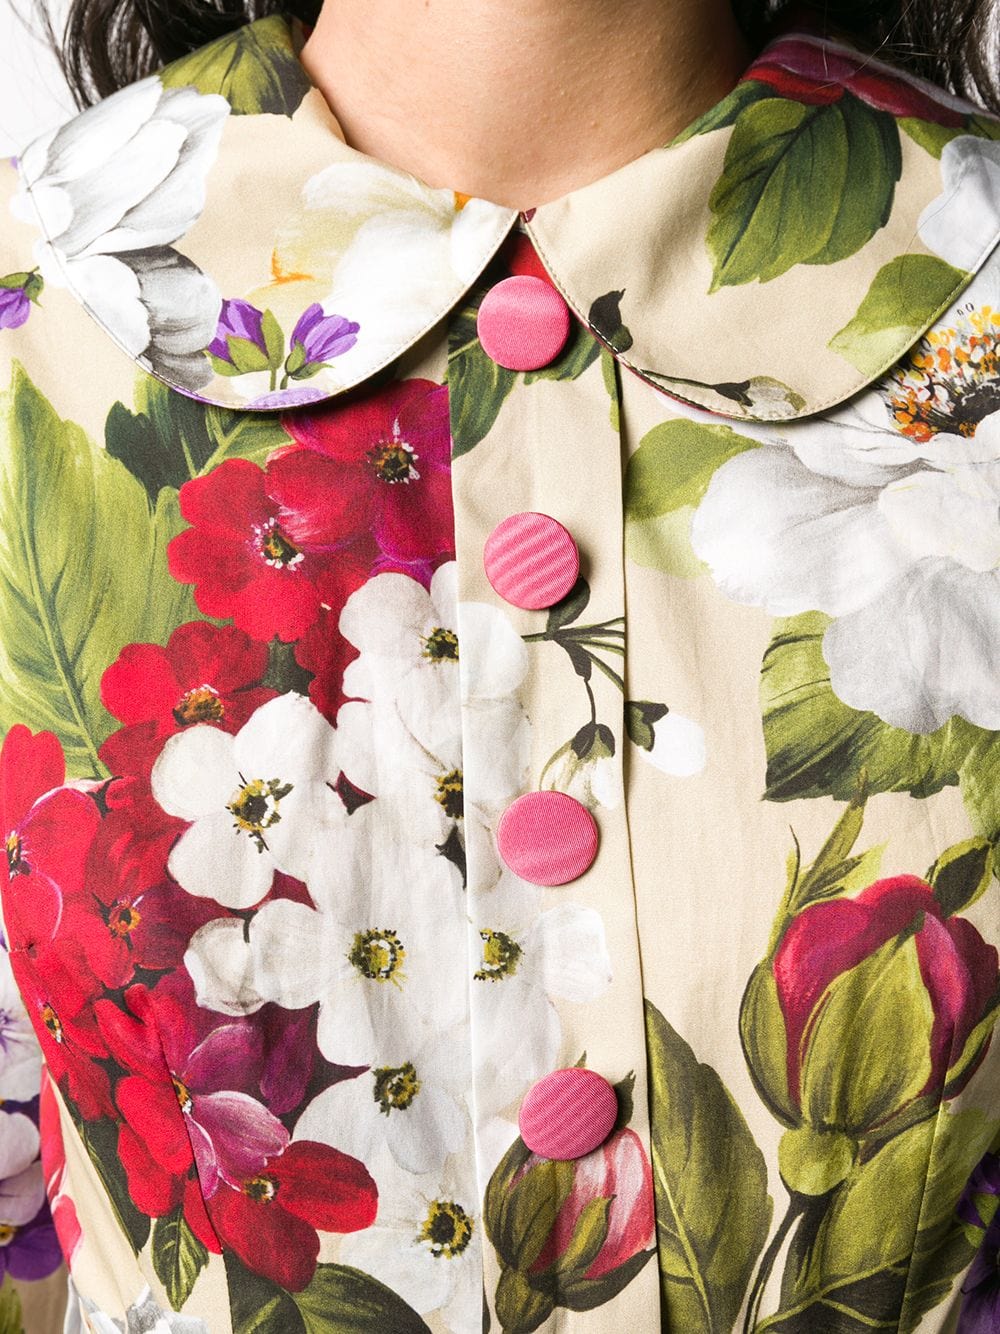 Dolce & Gabbana Floral Print Tie Waist Dress